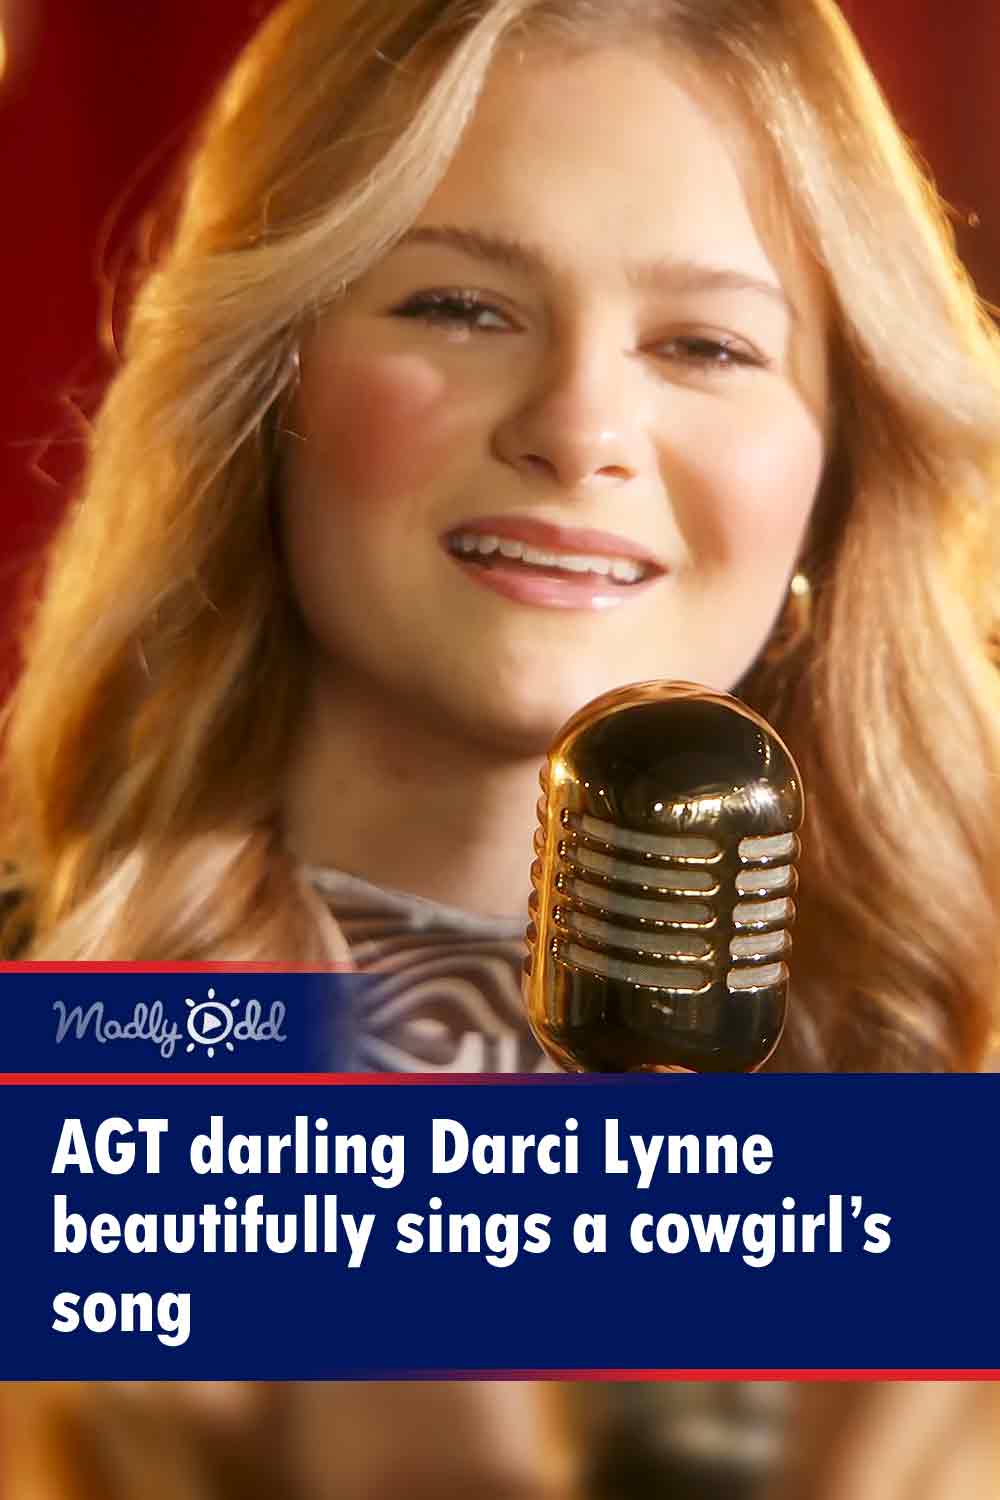 AGT darling Darci Lynne beautifully sings a cowgirl’s song